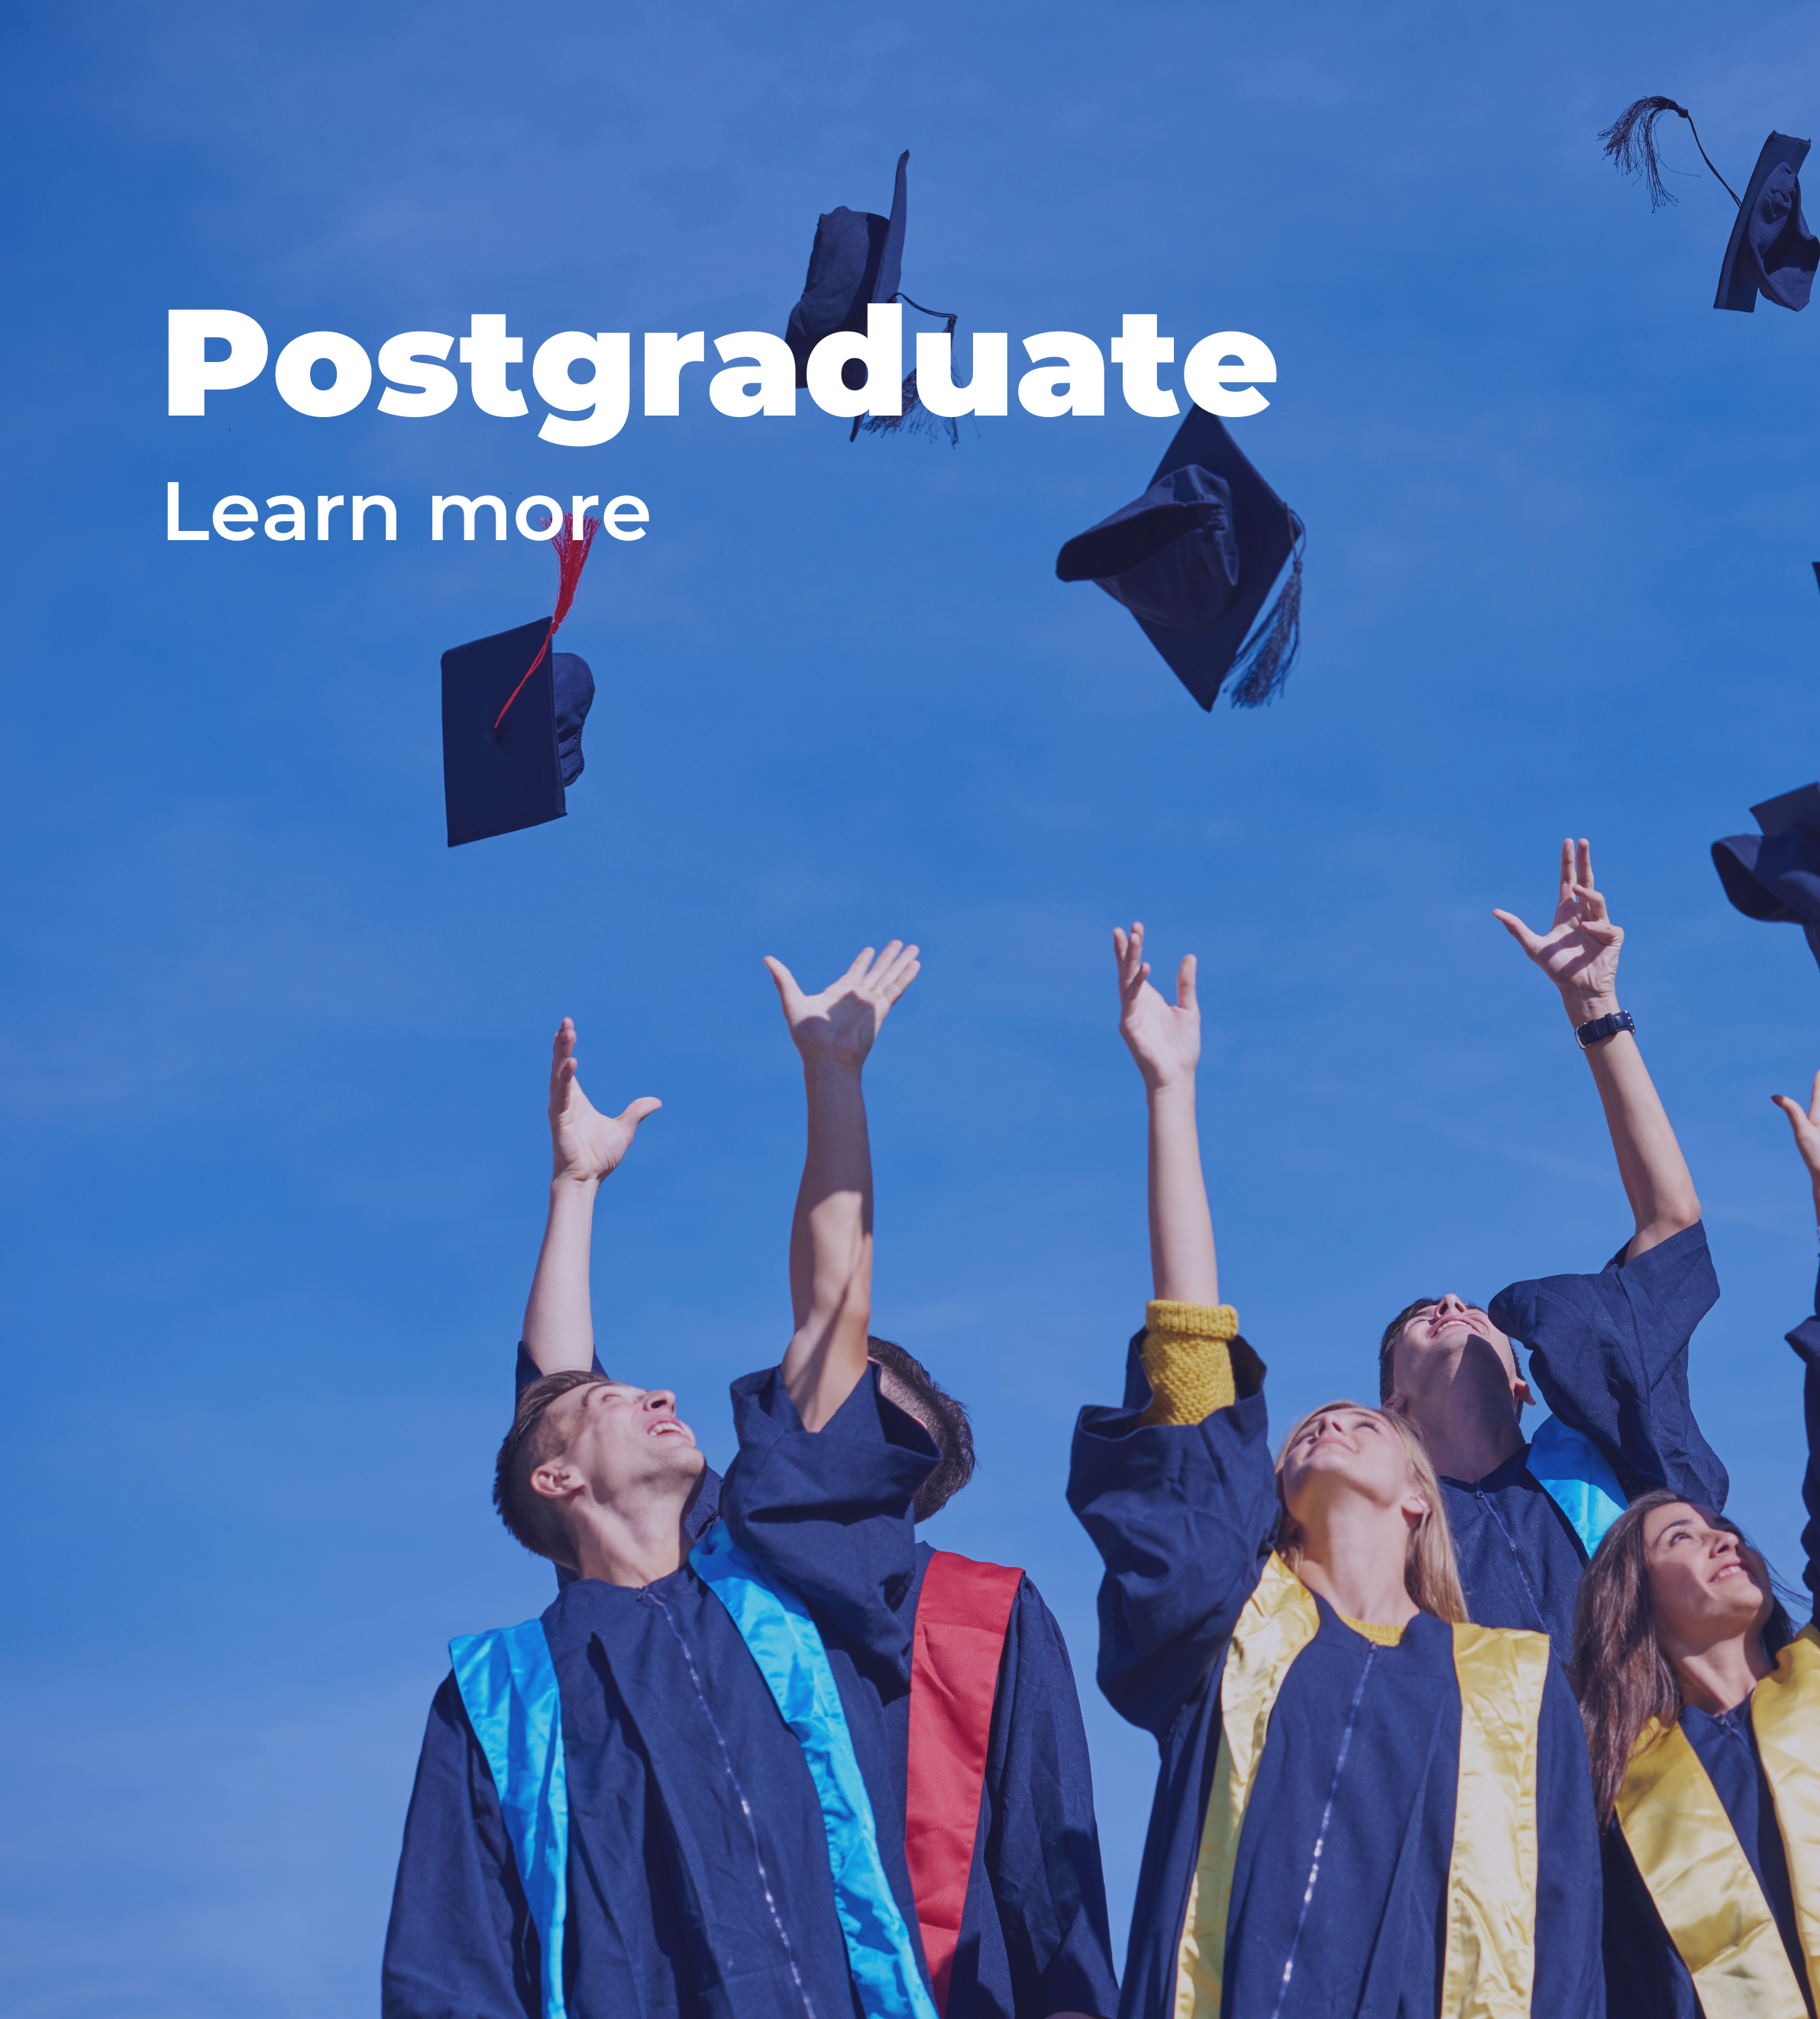 Postgraduate Services